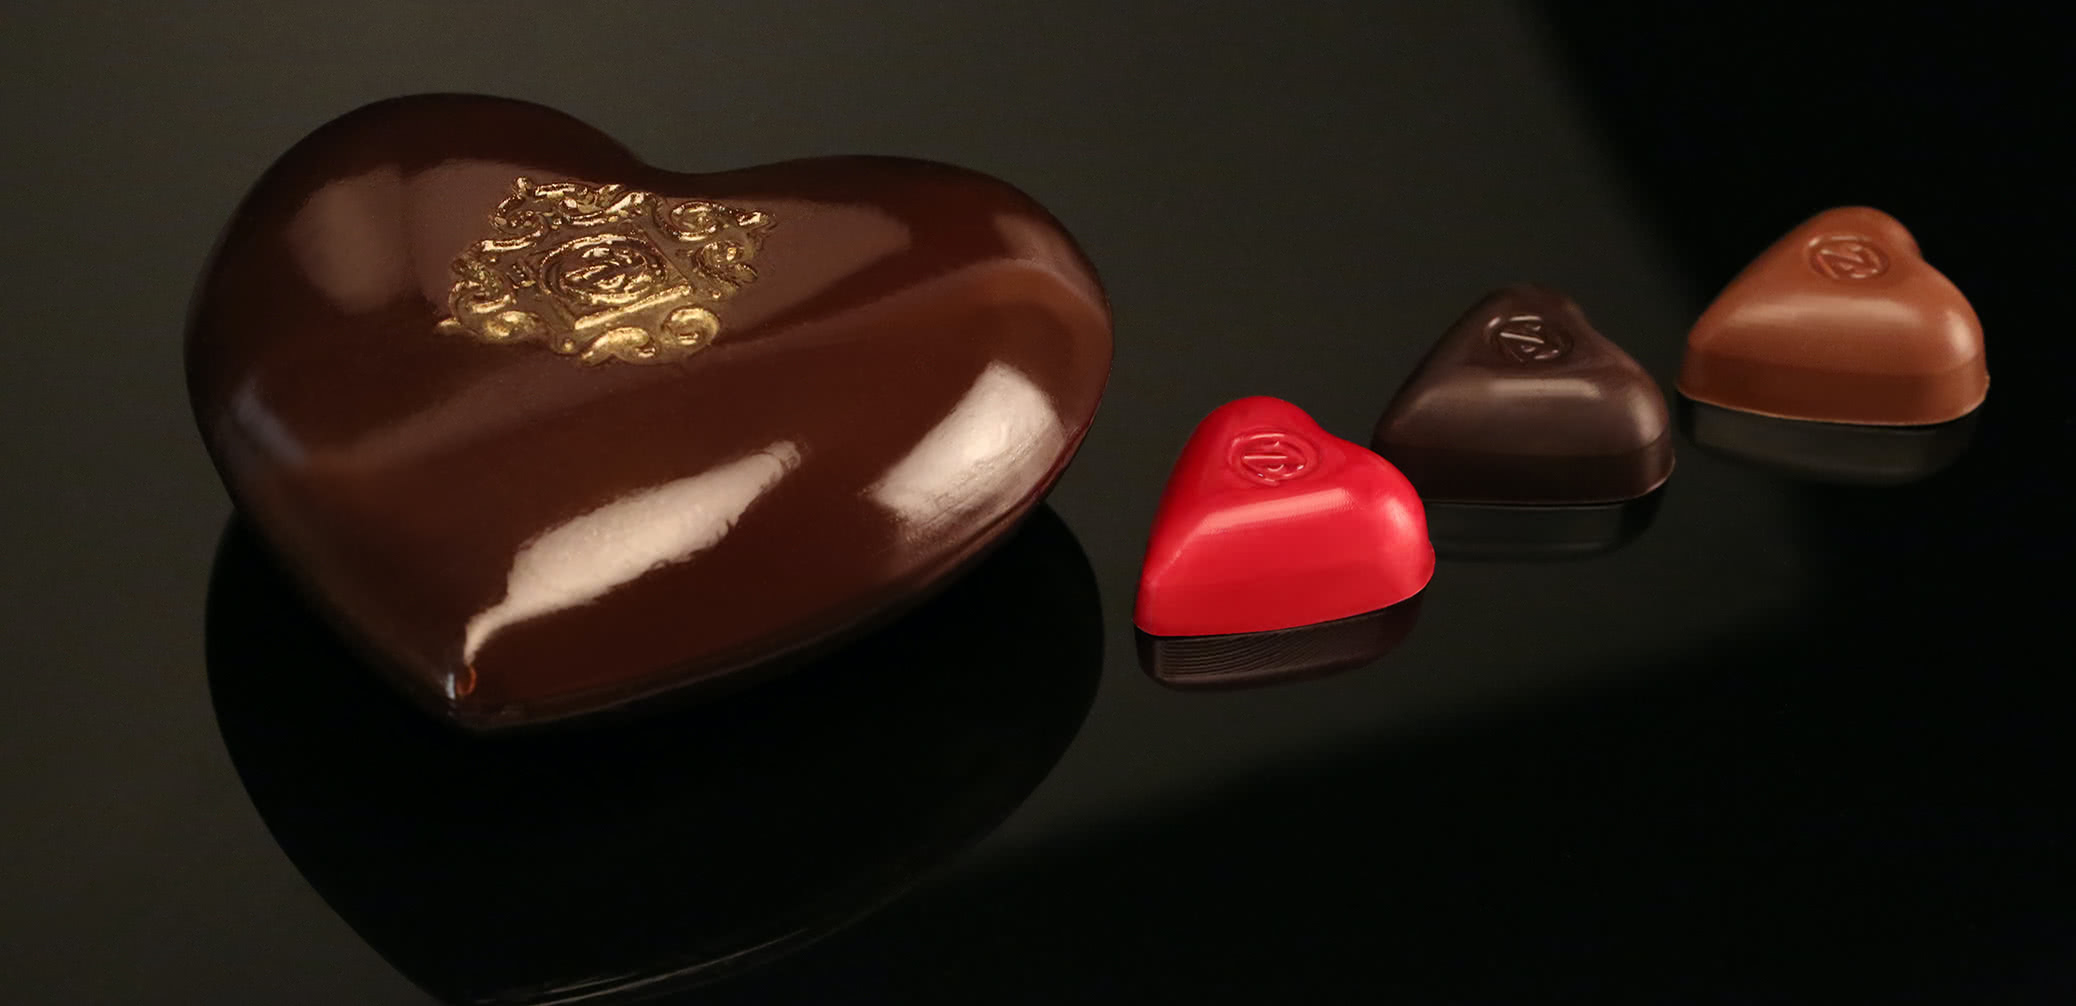 Top 10 Best Luxury Chocolates For Valentine’s Day